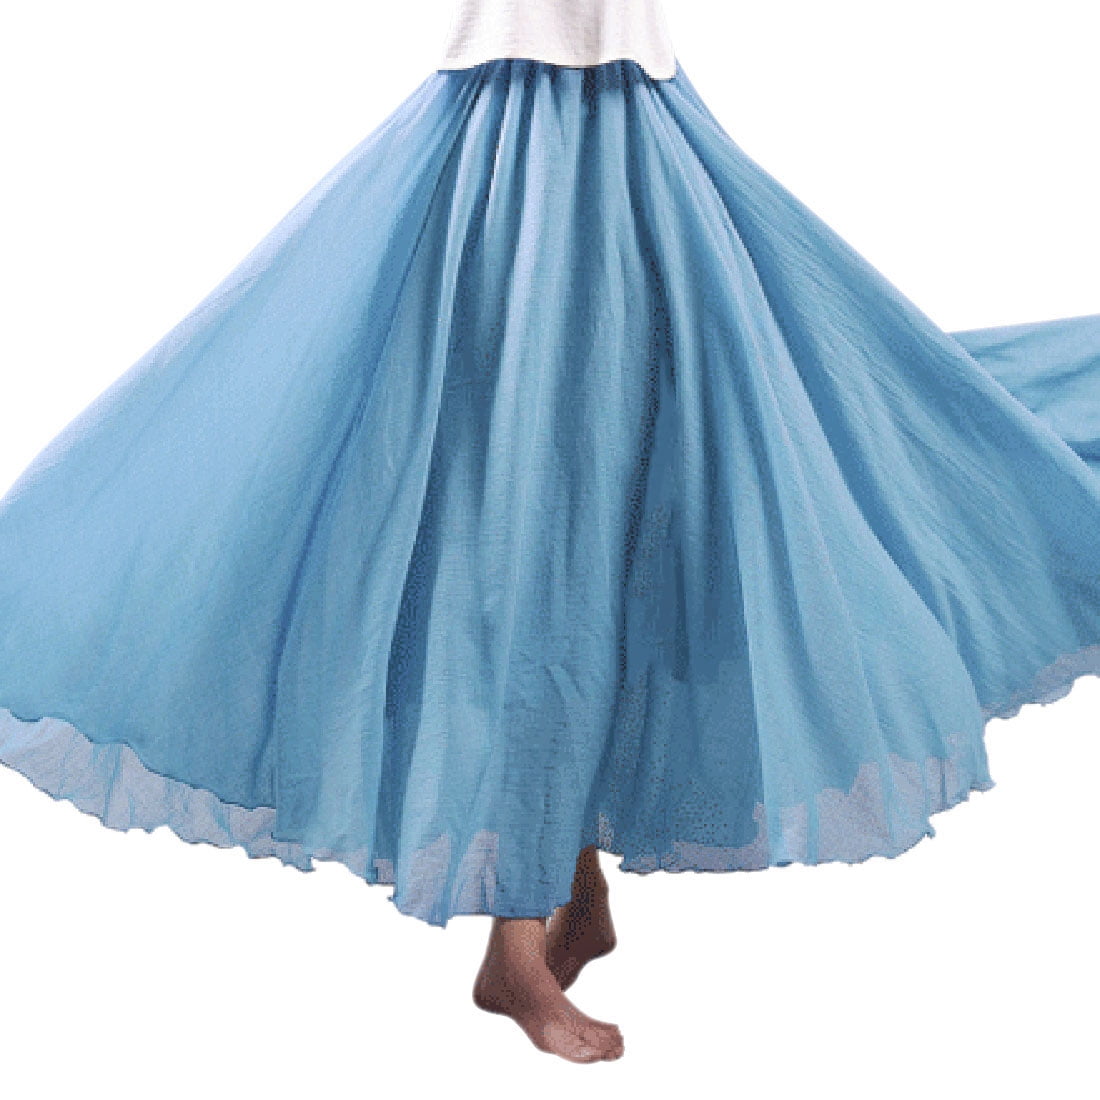 Nlife Women's Bohemian High Waist Flowy Double Layer Maxi Skirt ...